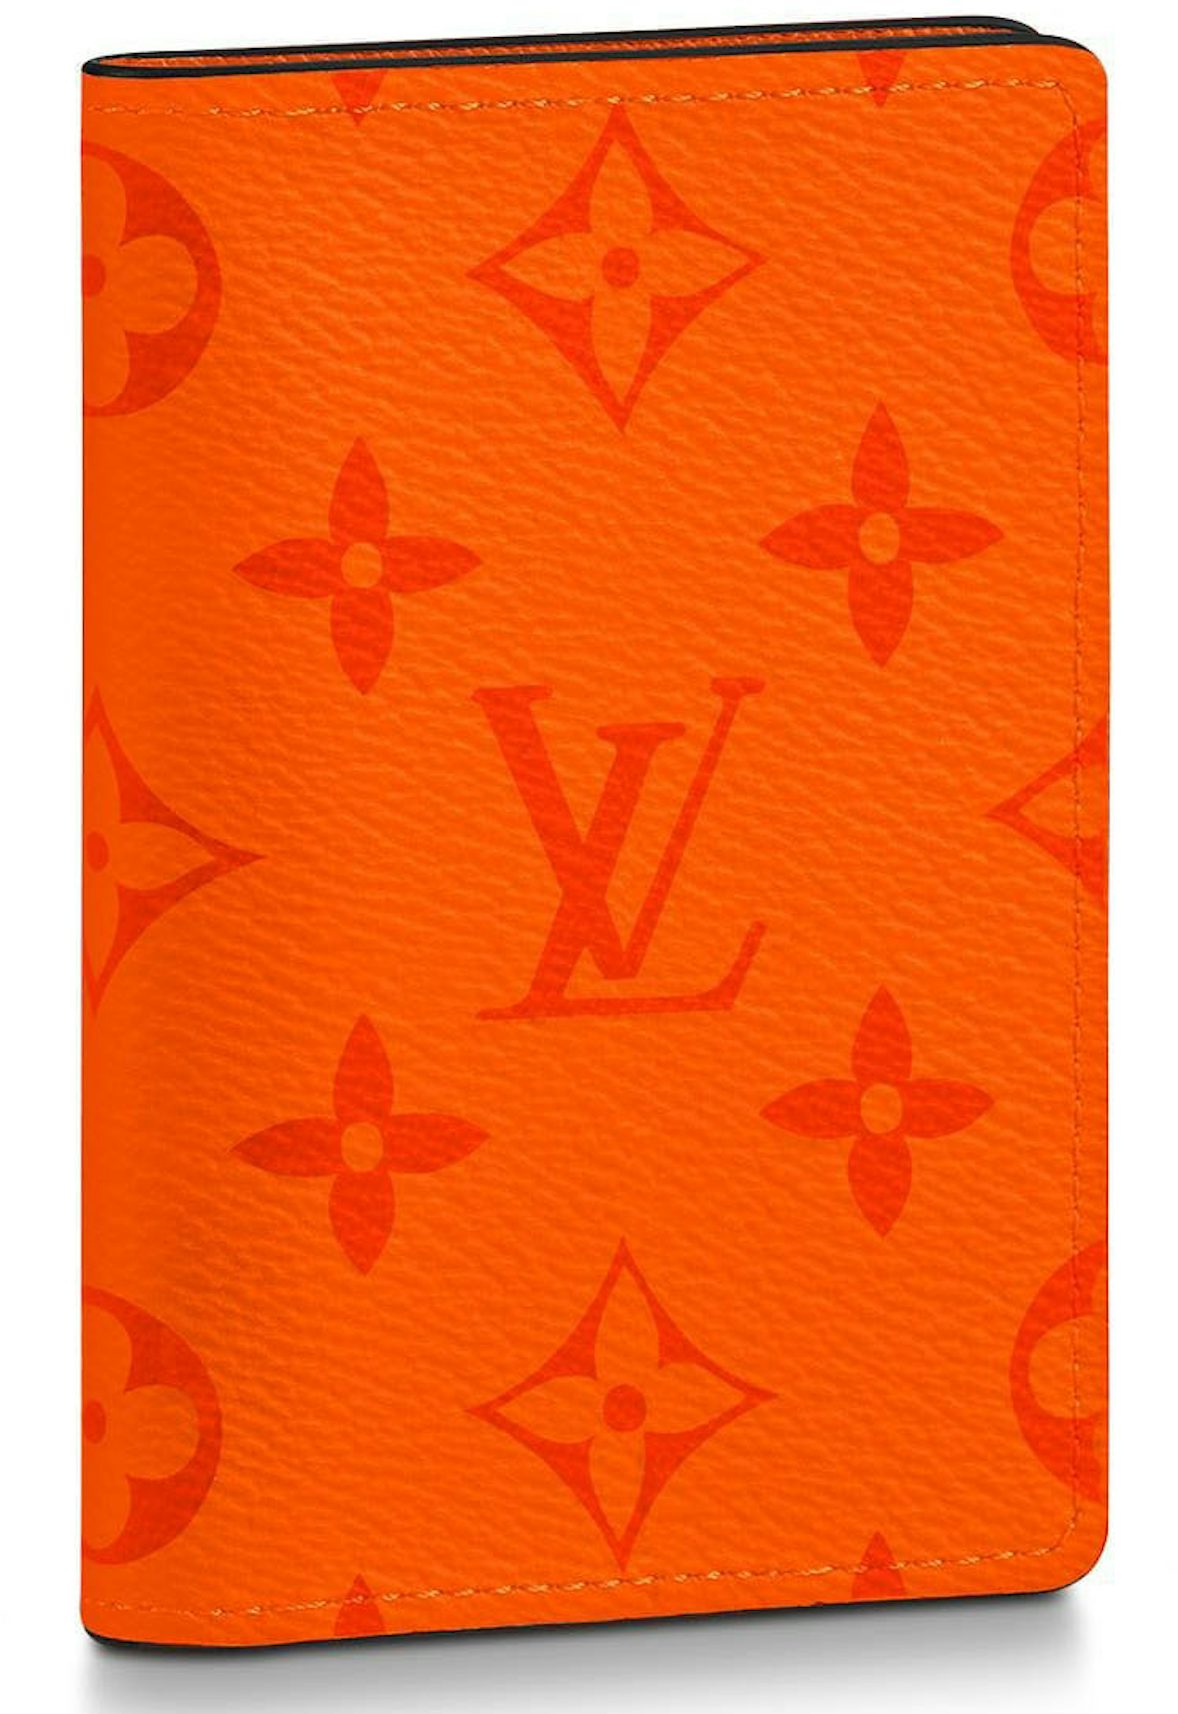 Men's Louis Vuitton Hoodies from $817